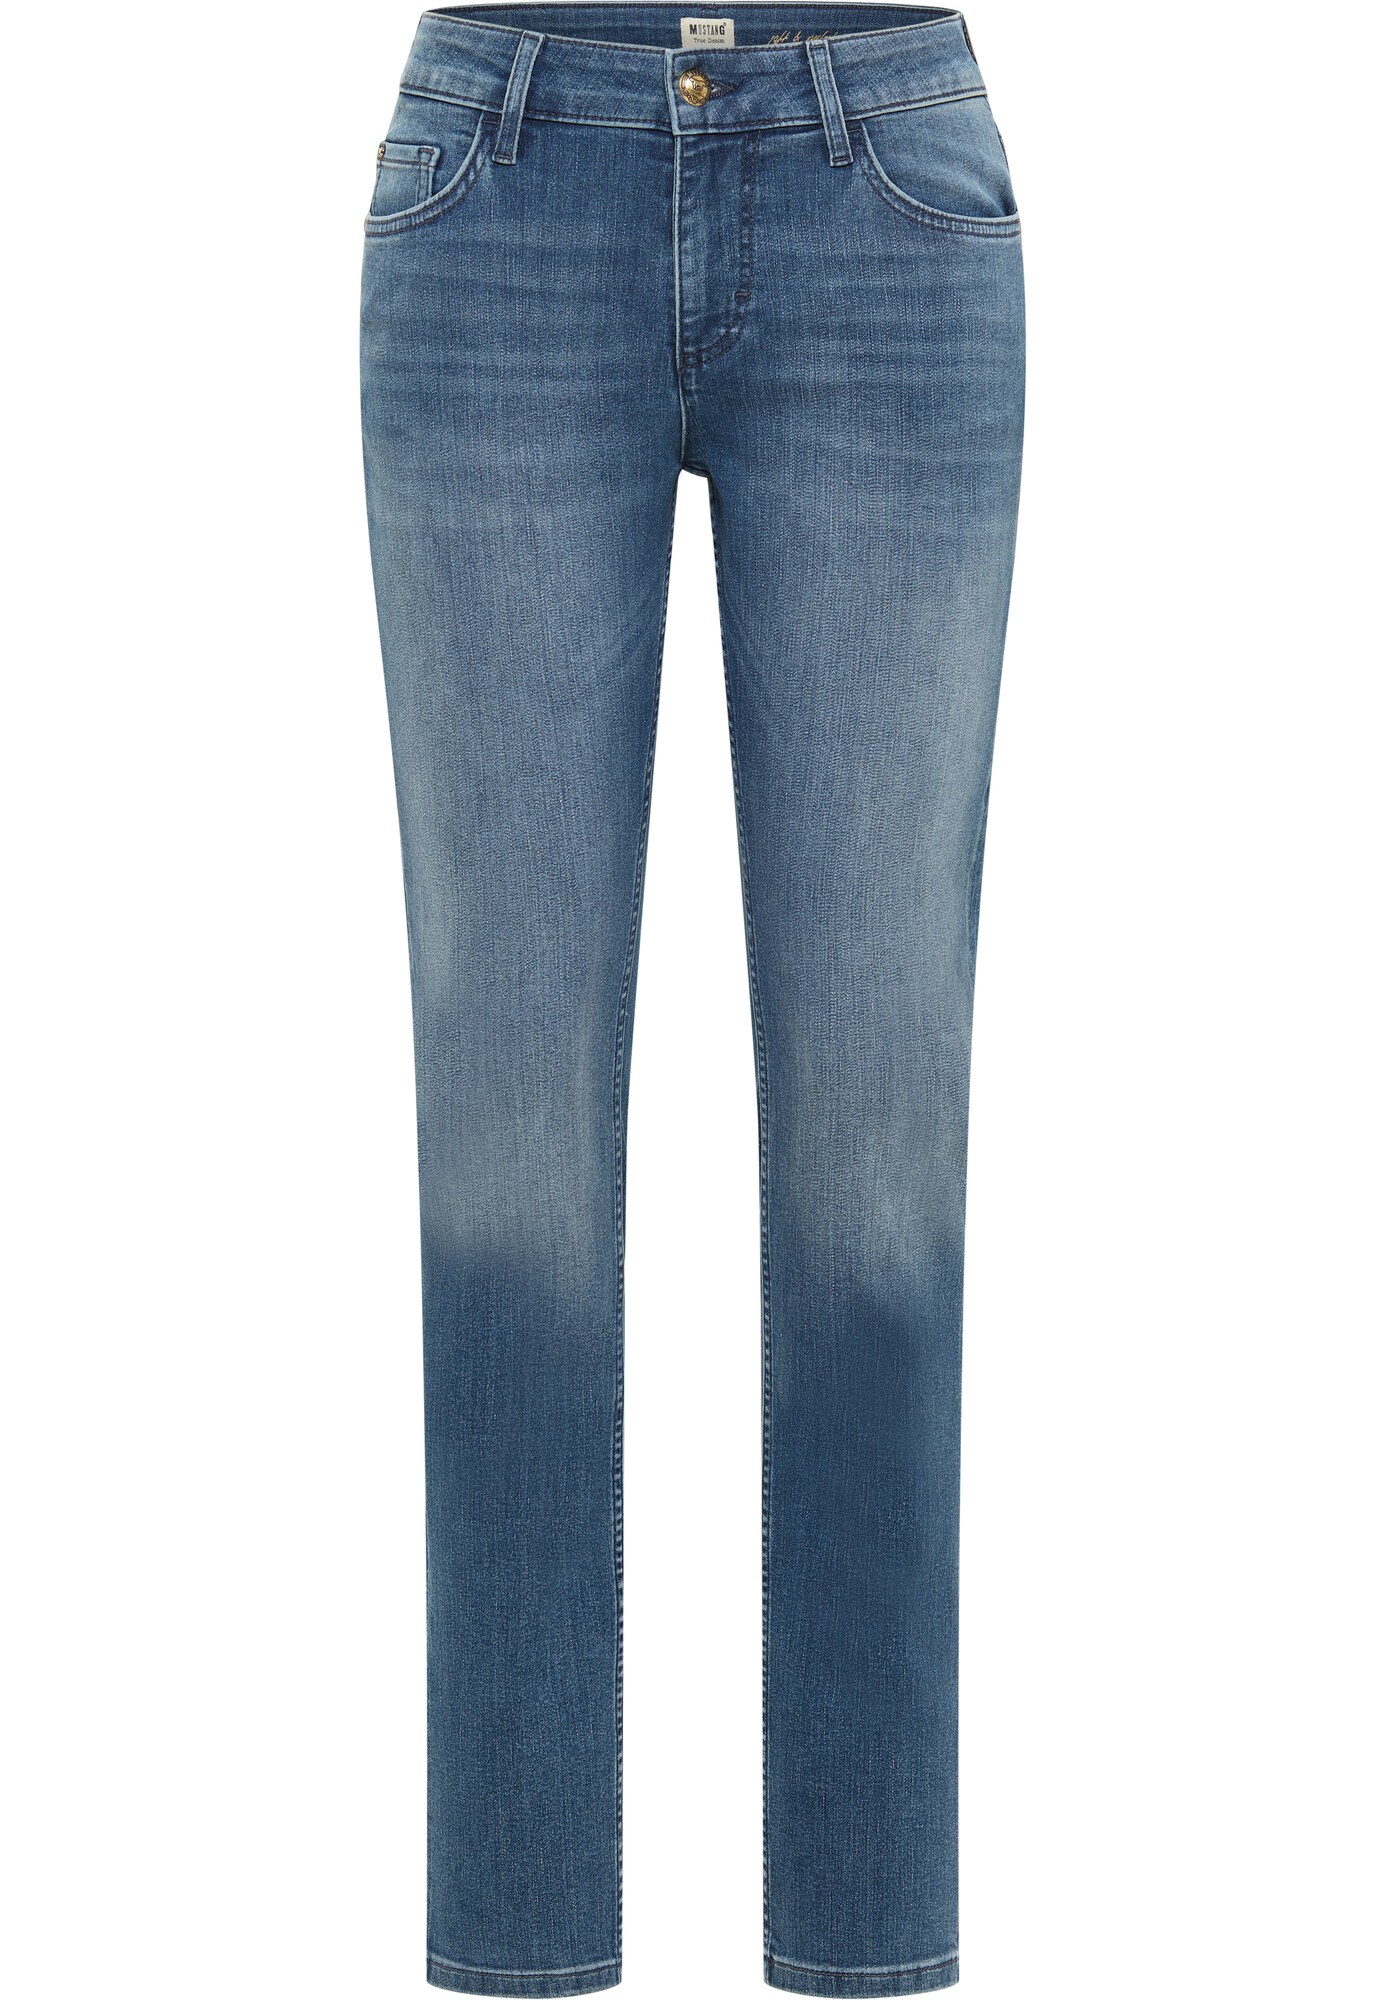 MUSTANG Jeans blau / braun / offwhite